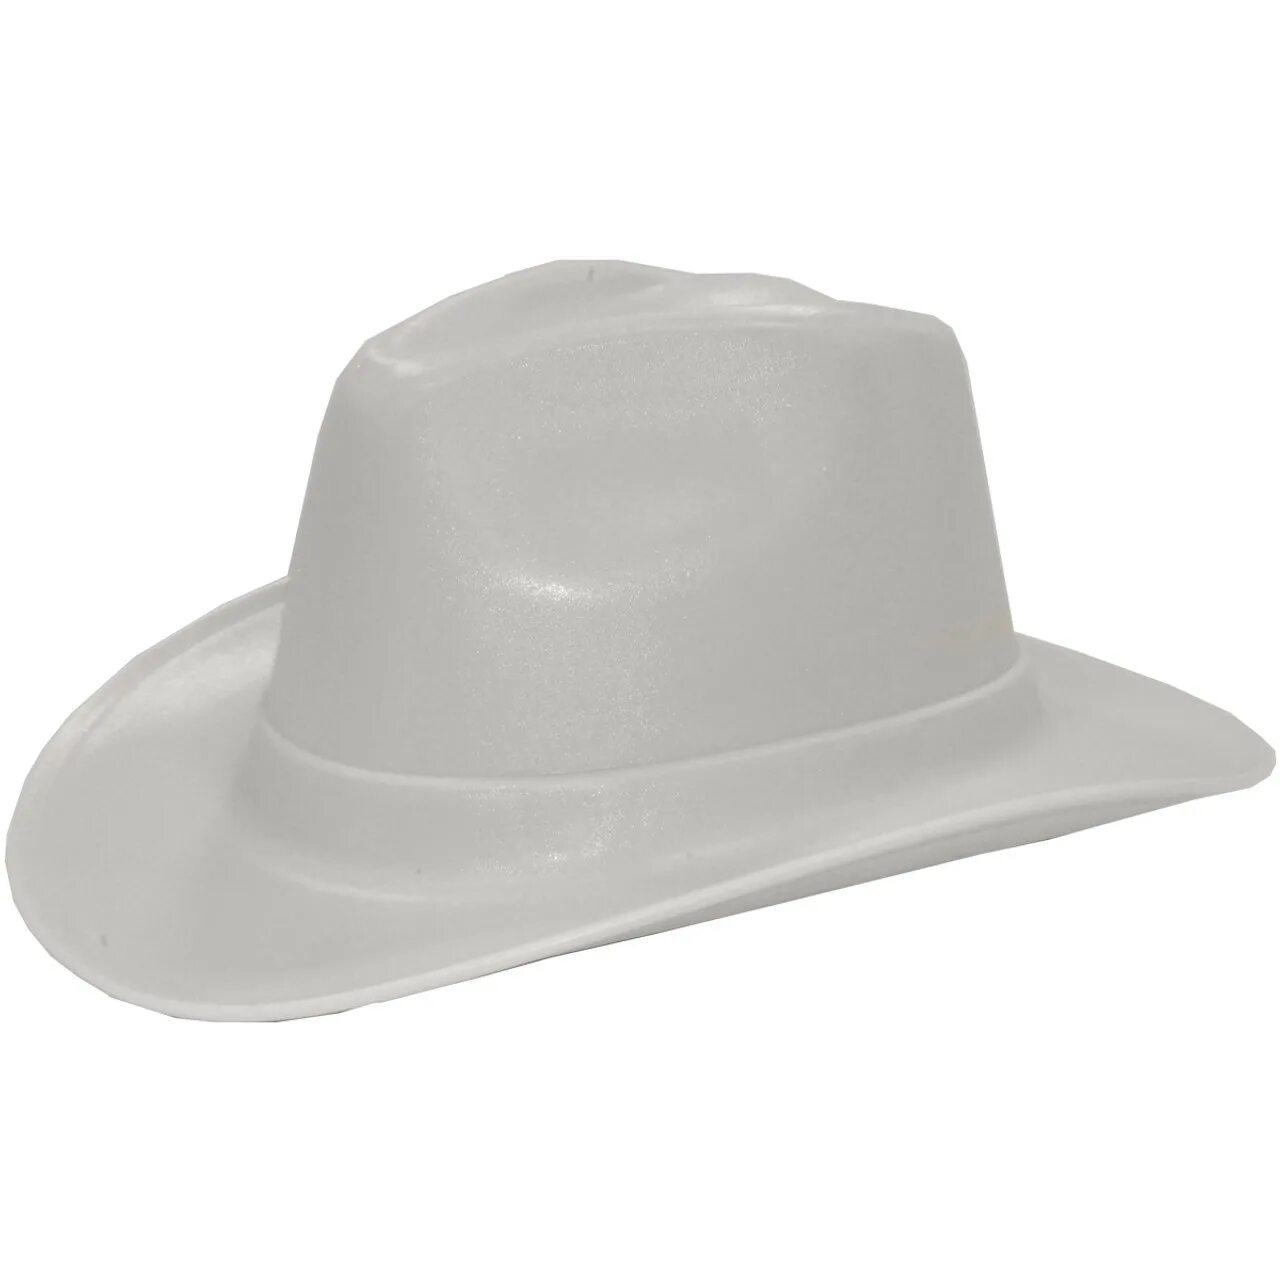 Vulka vcb100-00 hard hat строительная. Cowboy hat каска. Vulcan Cowboy Style hard hat White. Каска защитная ковбойская шляпа. Каска в форме шляпы